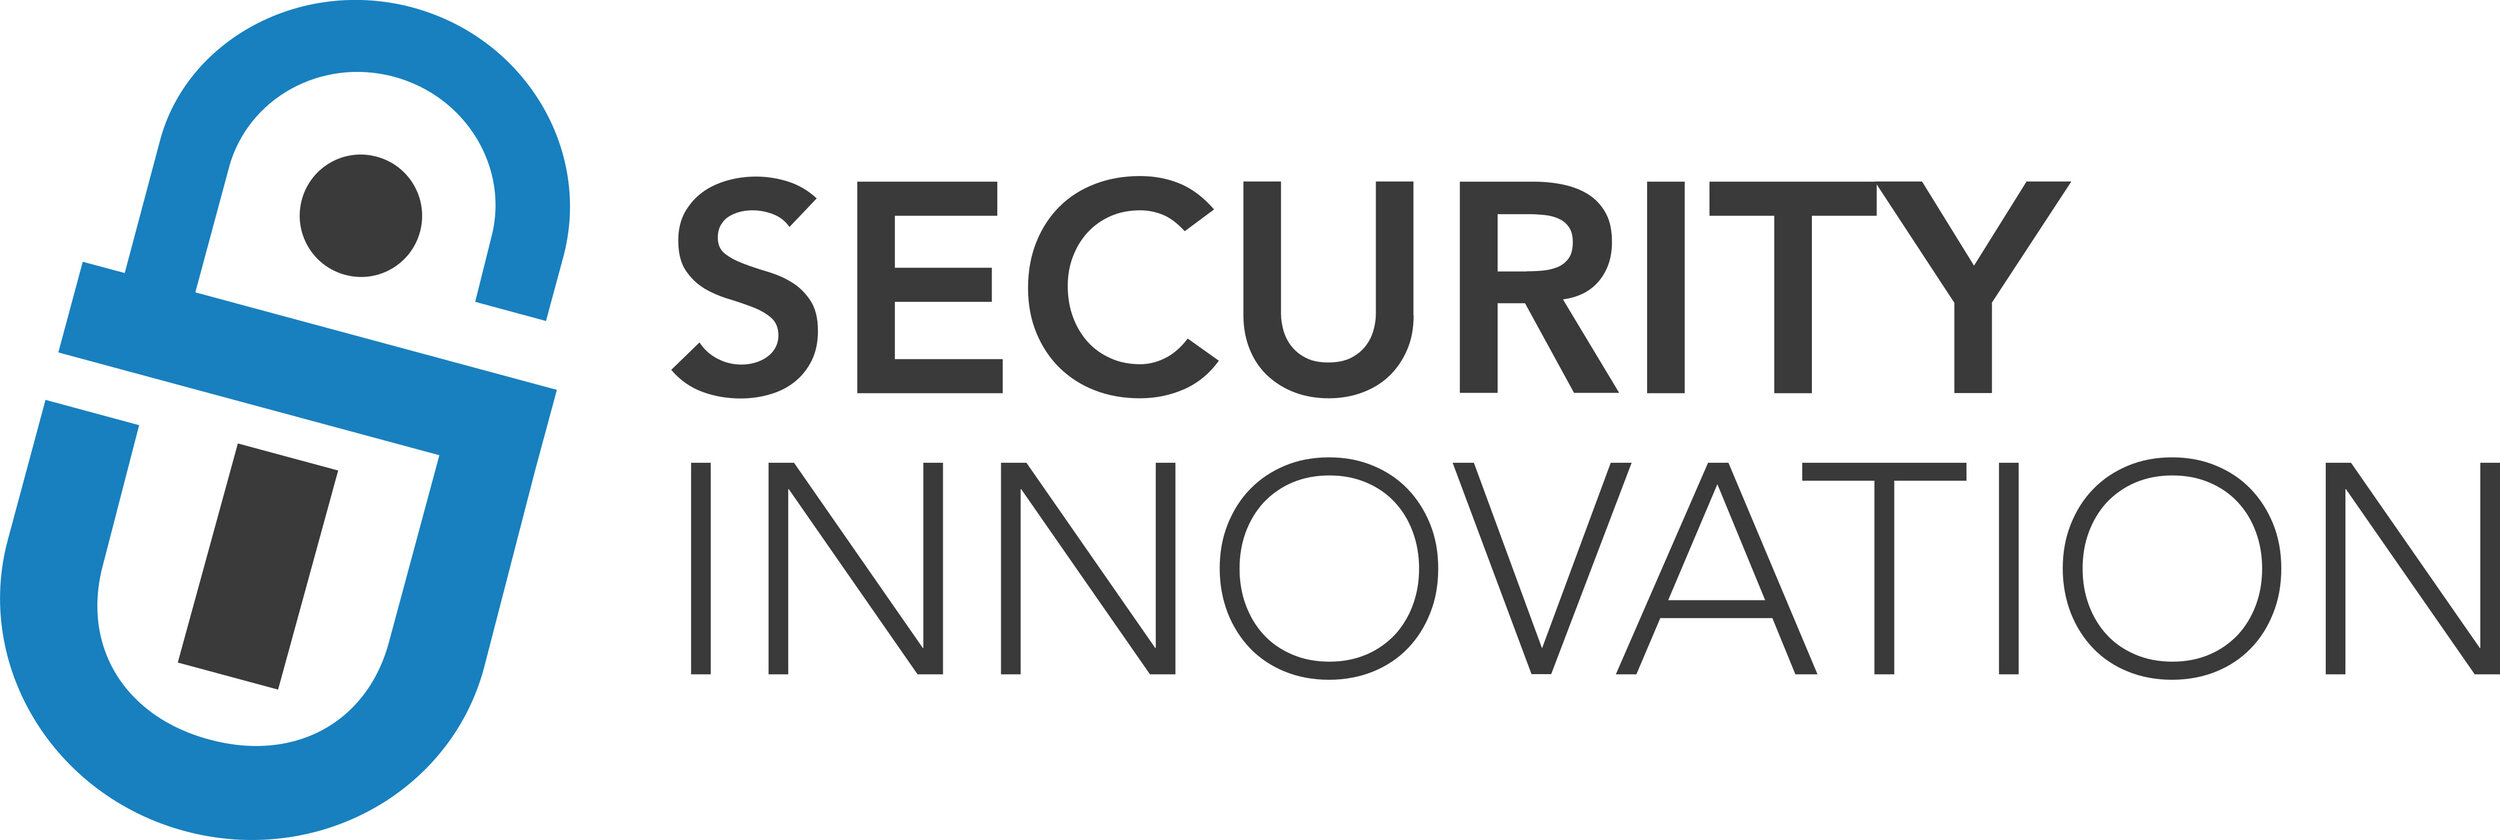 SecurityInnovation-logo.jpg